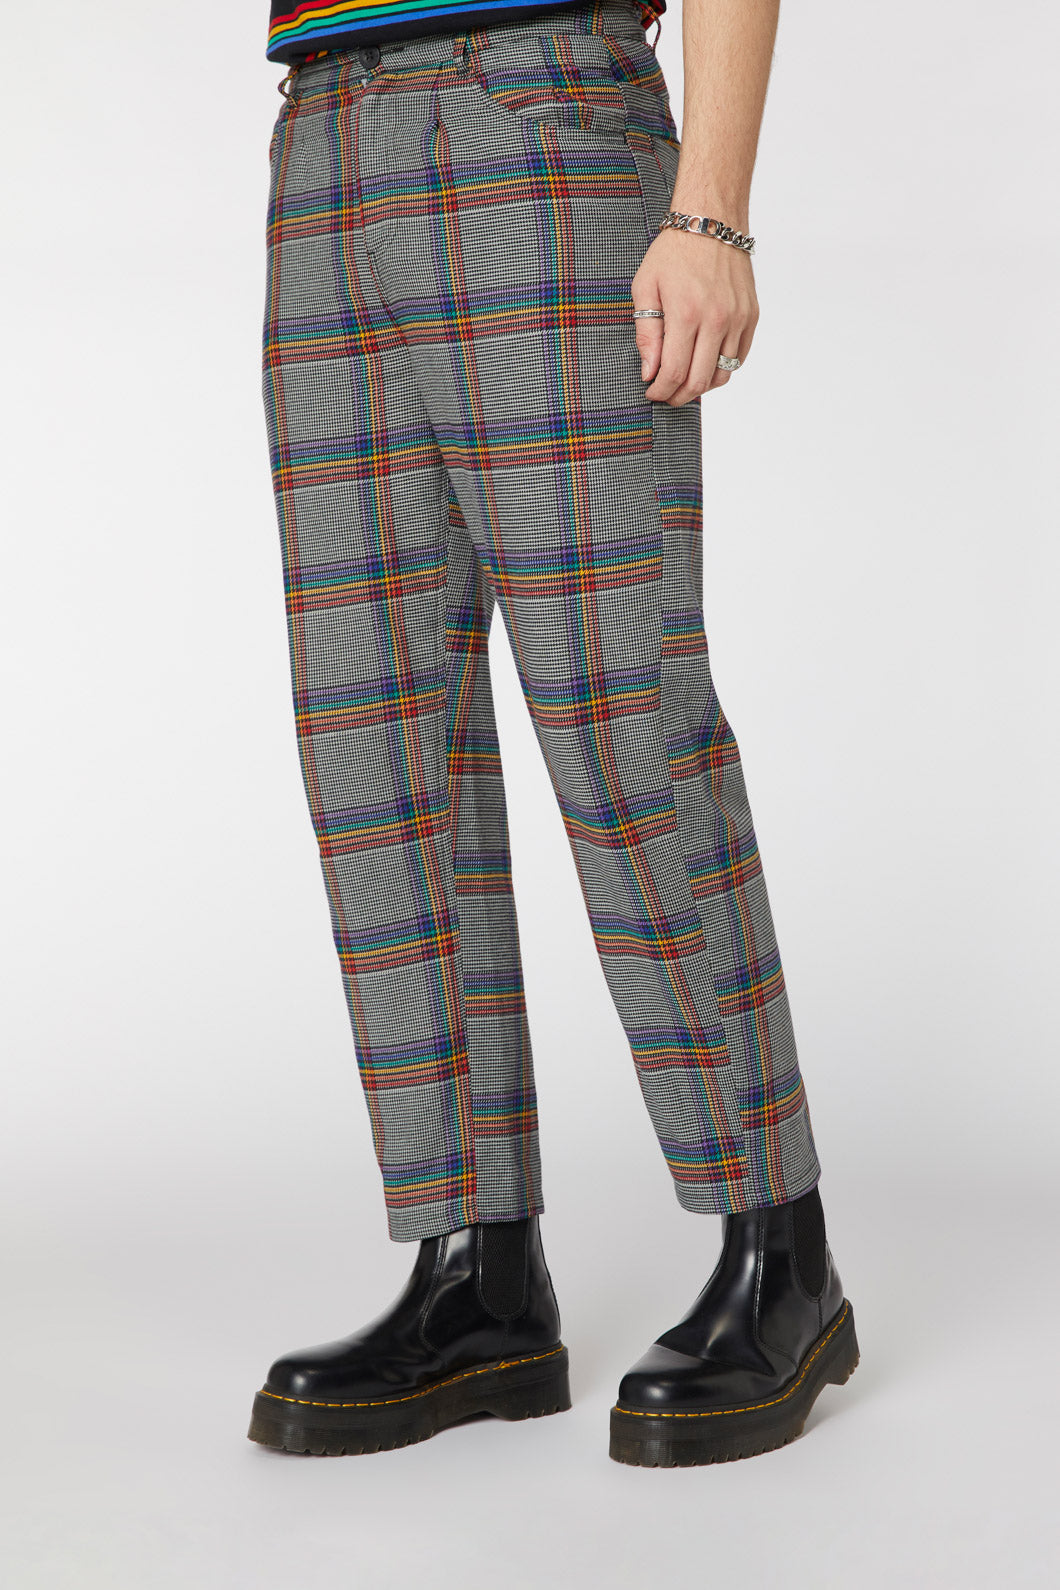 JUCUFF PANTS RAINBOW Cotton sports trousers  Unisex  Diadora Online  Store IN